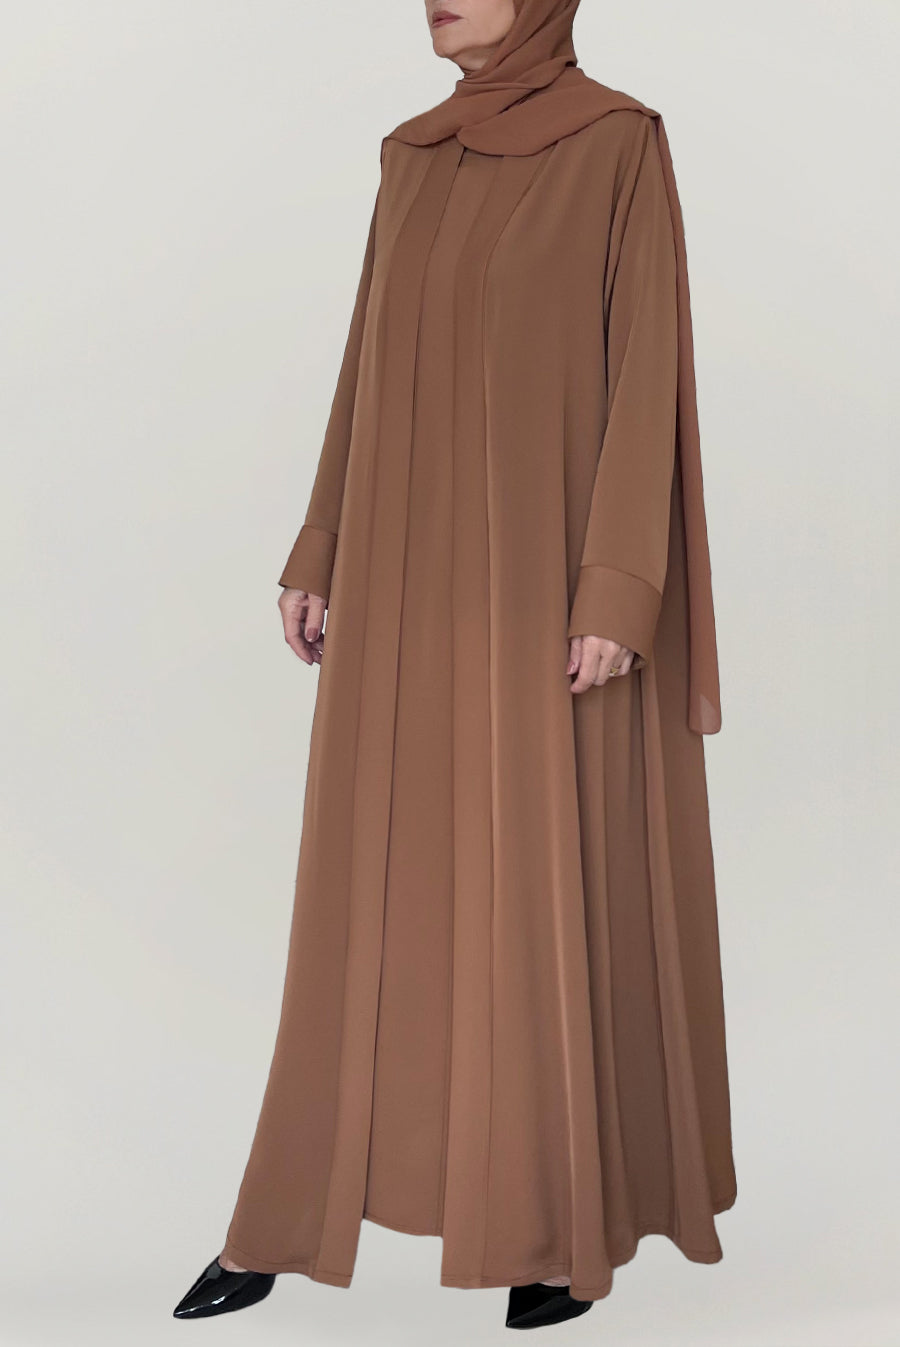 thowby Rayan abaya set - online boutique